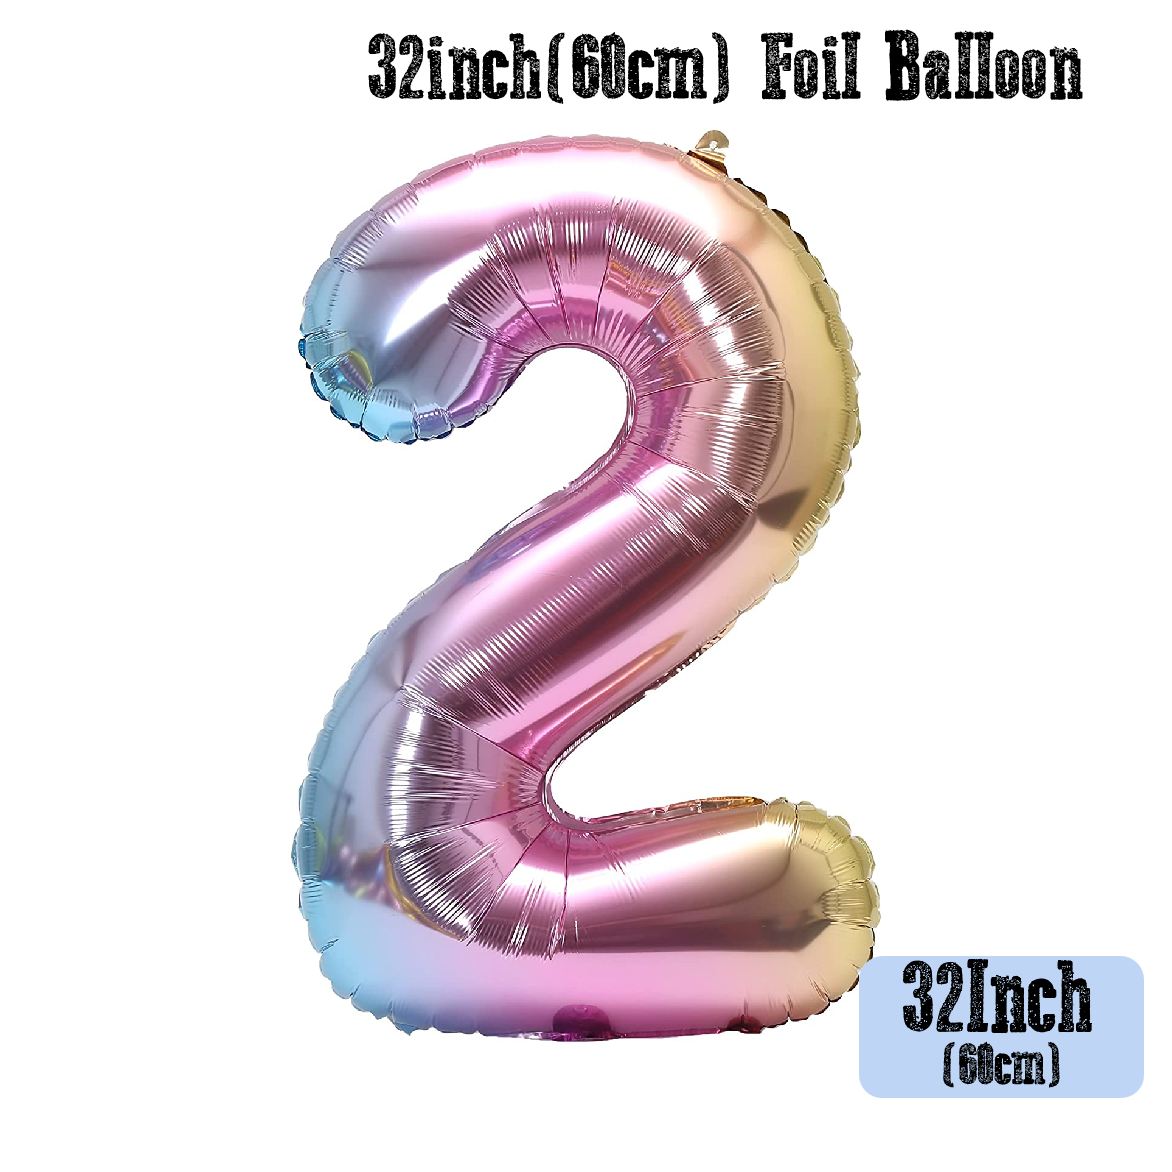 Party Decoration Balloon - 32 Inch Rainbow #2